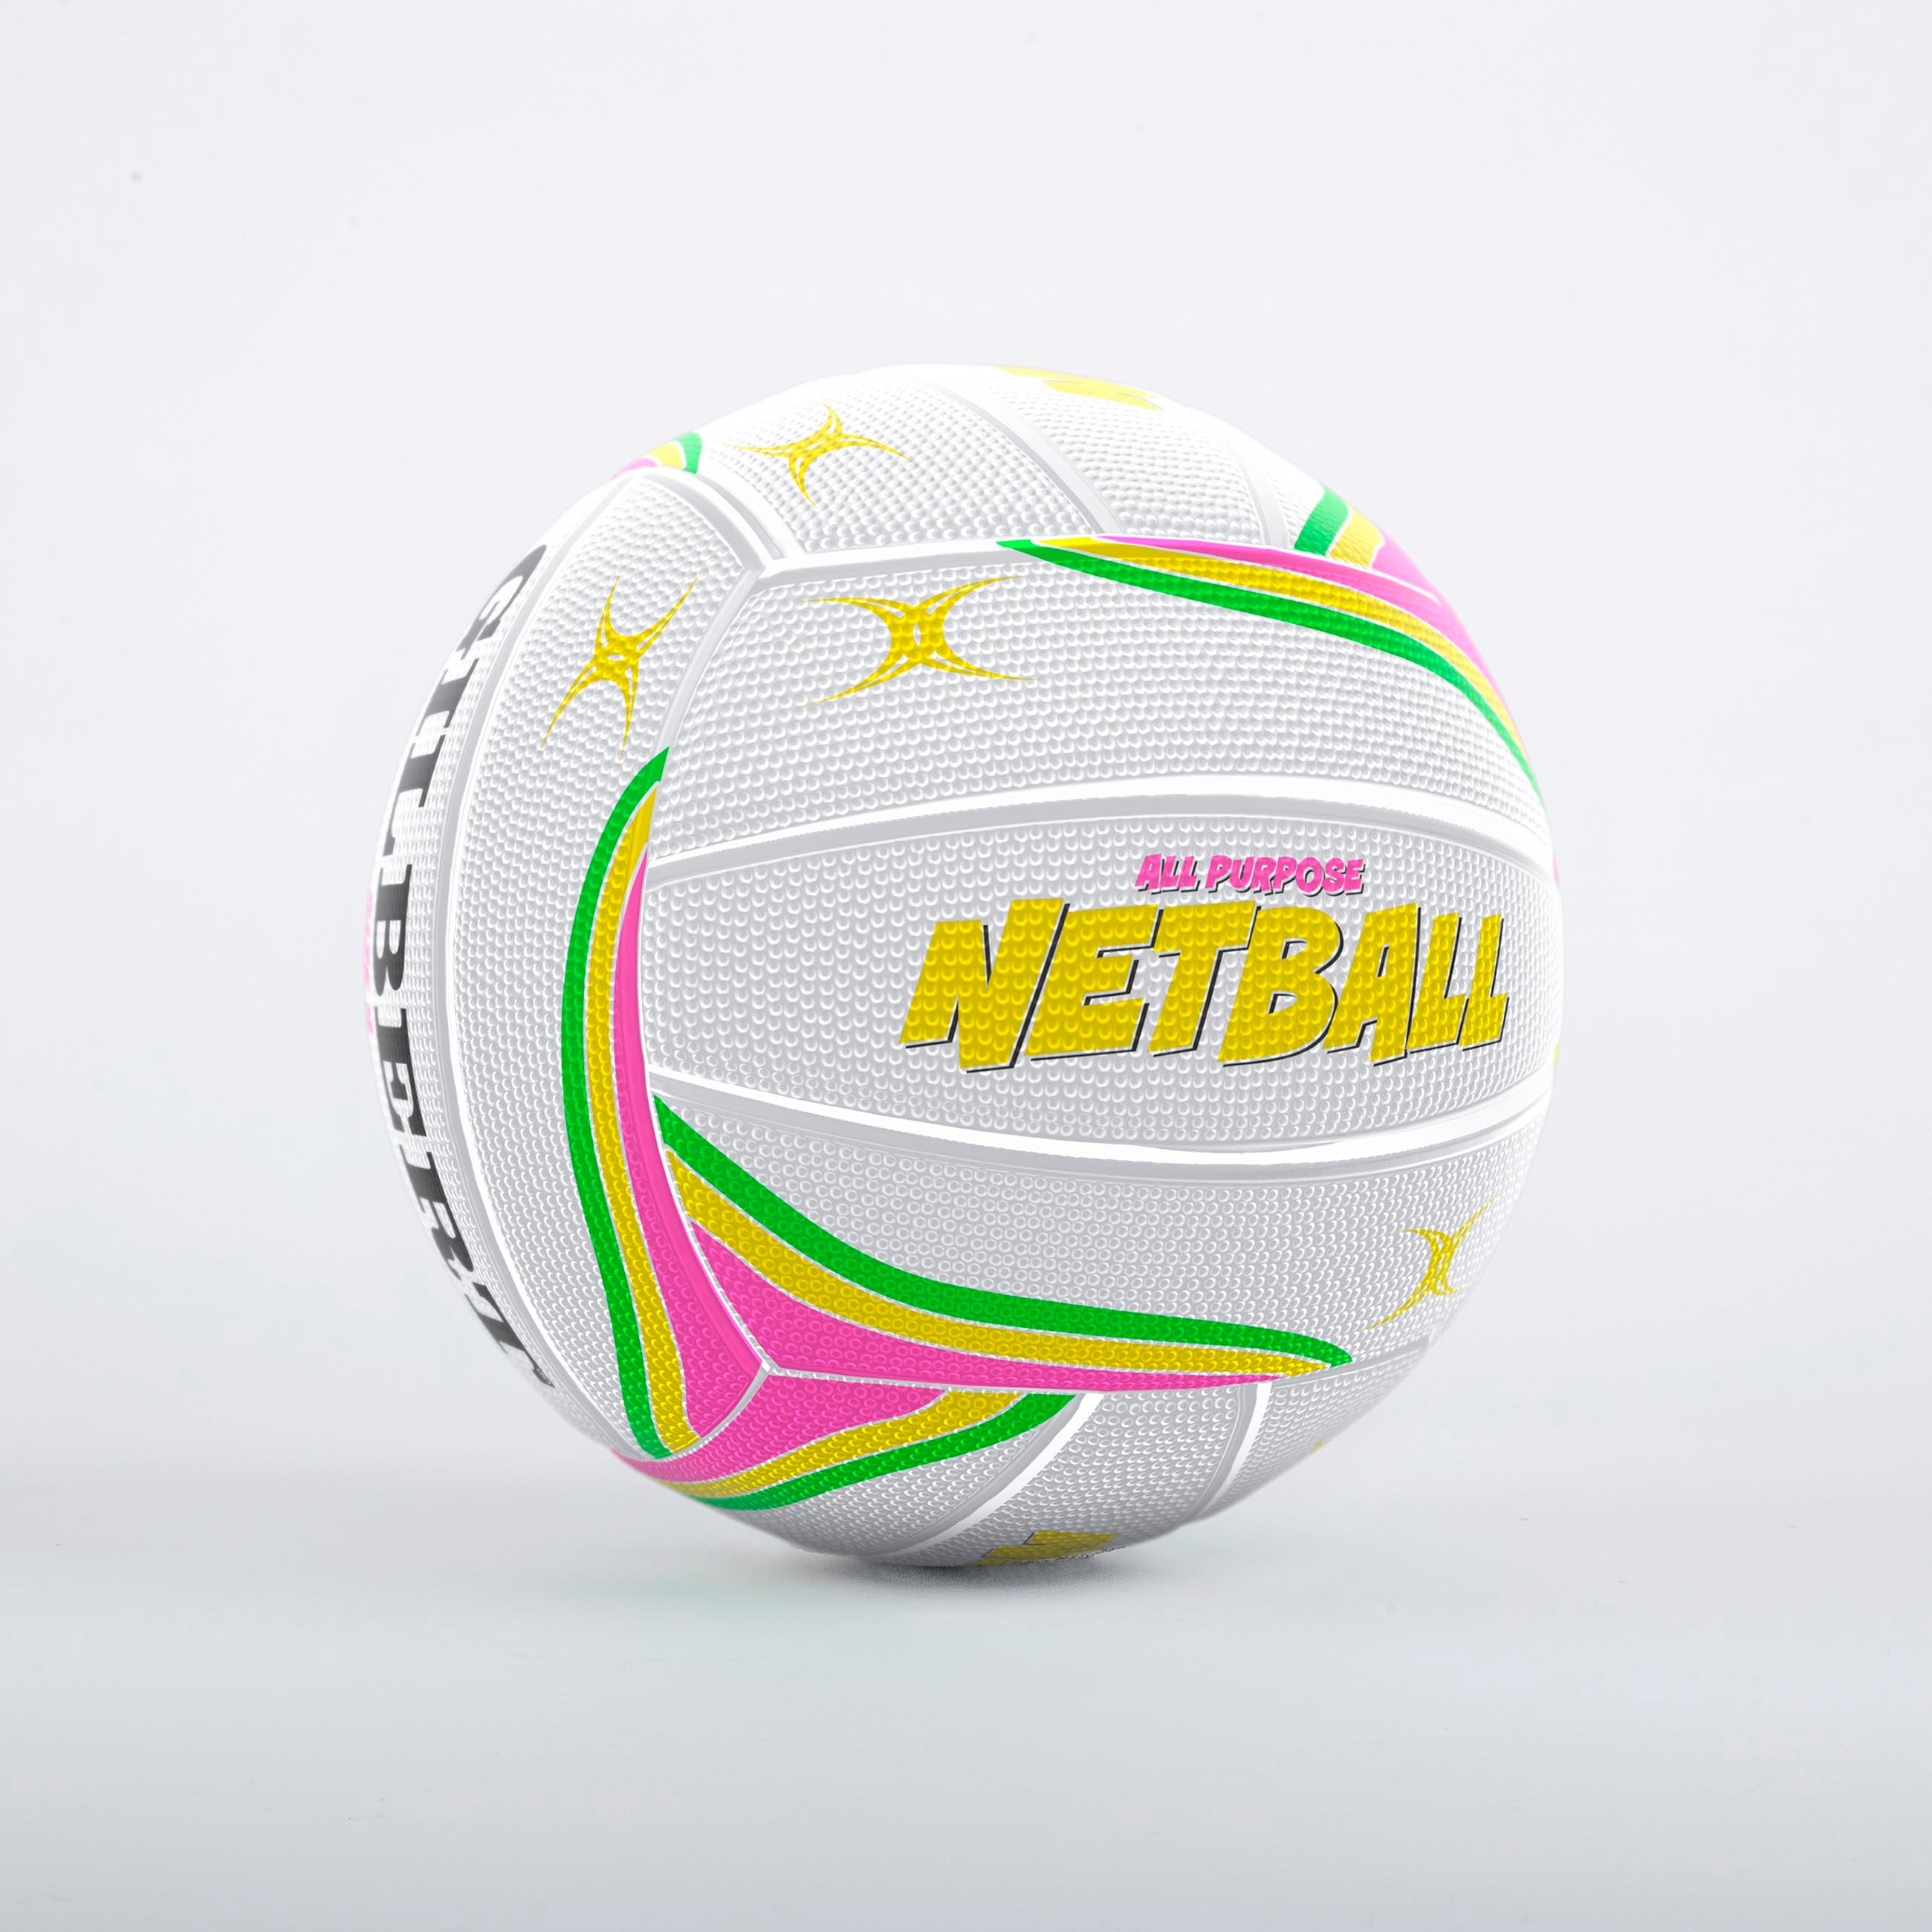 APT Training Netball